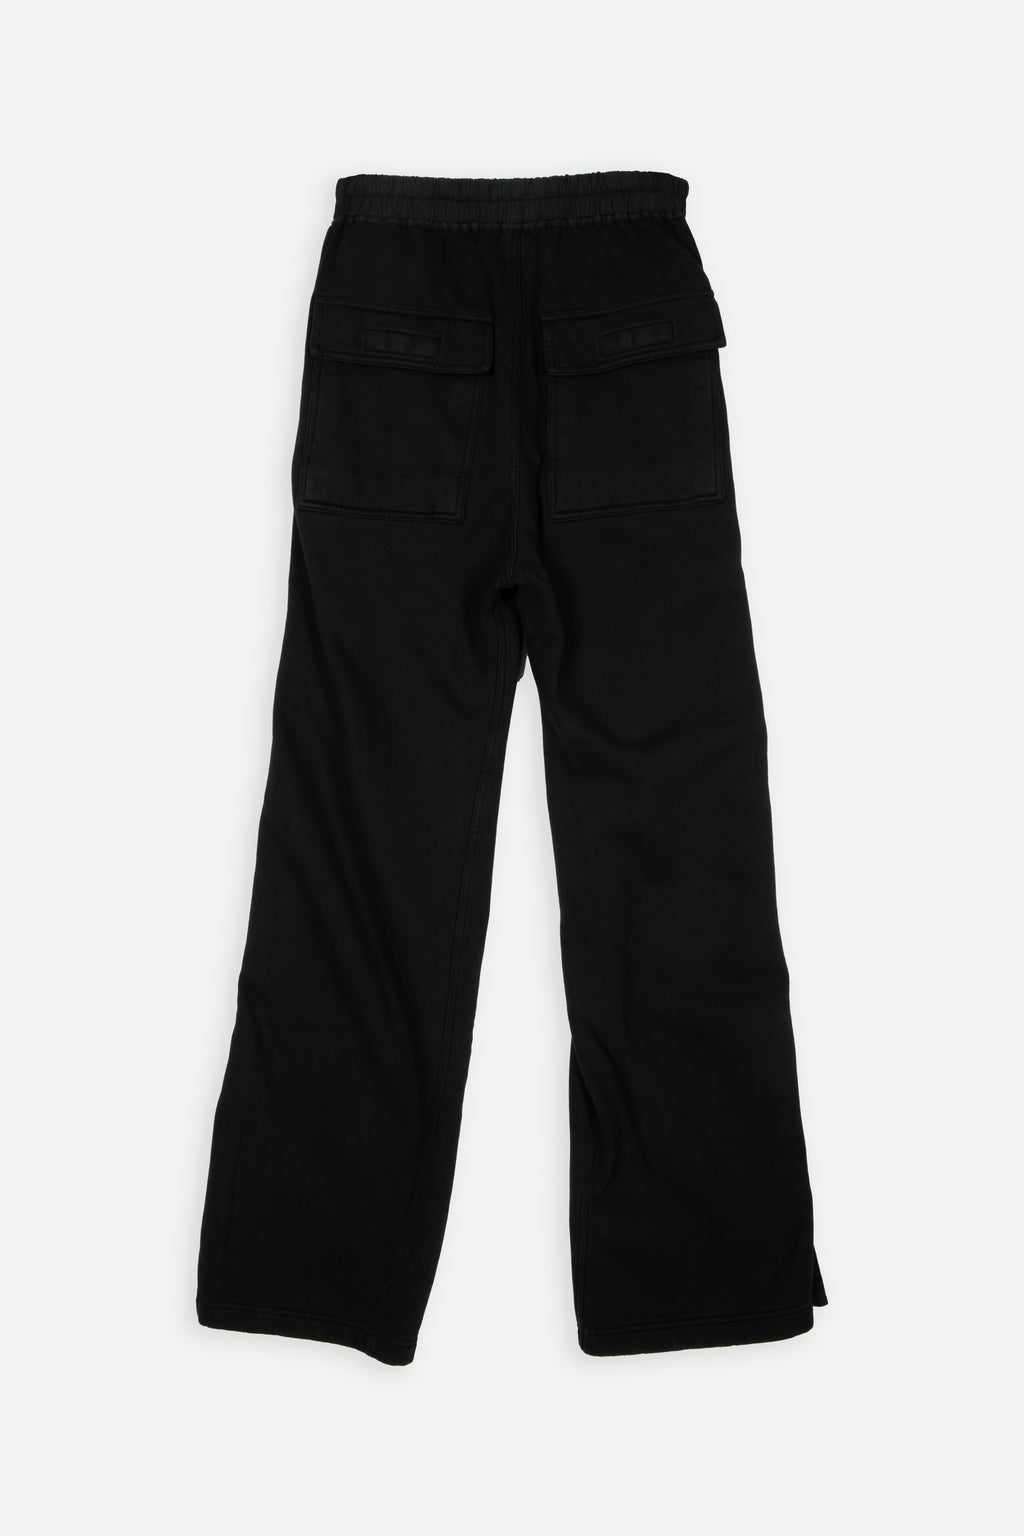 alt-image__Black-cotton-sweatpants-with-side-snaps---Pusher-Pants